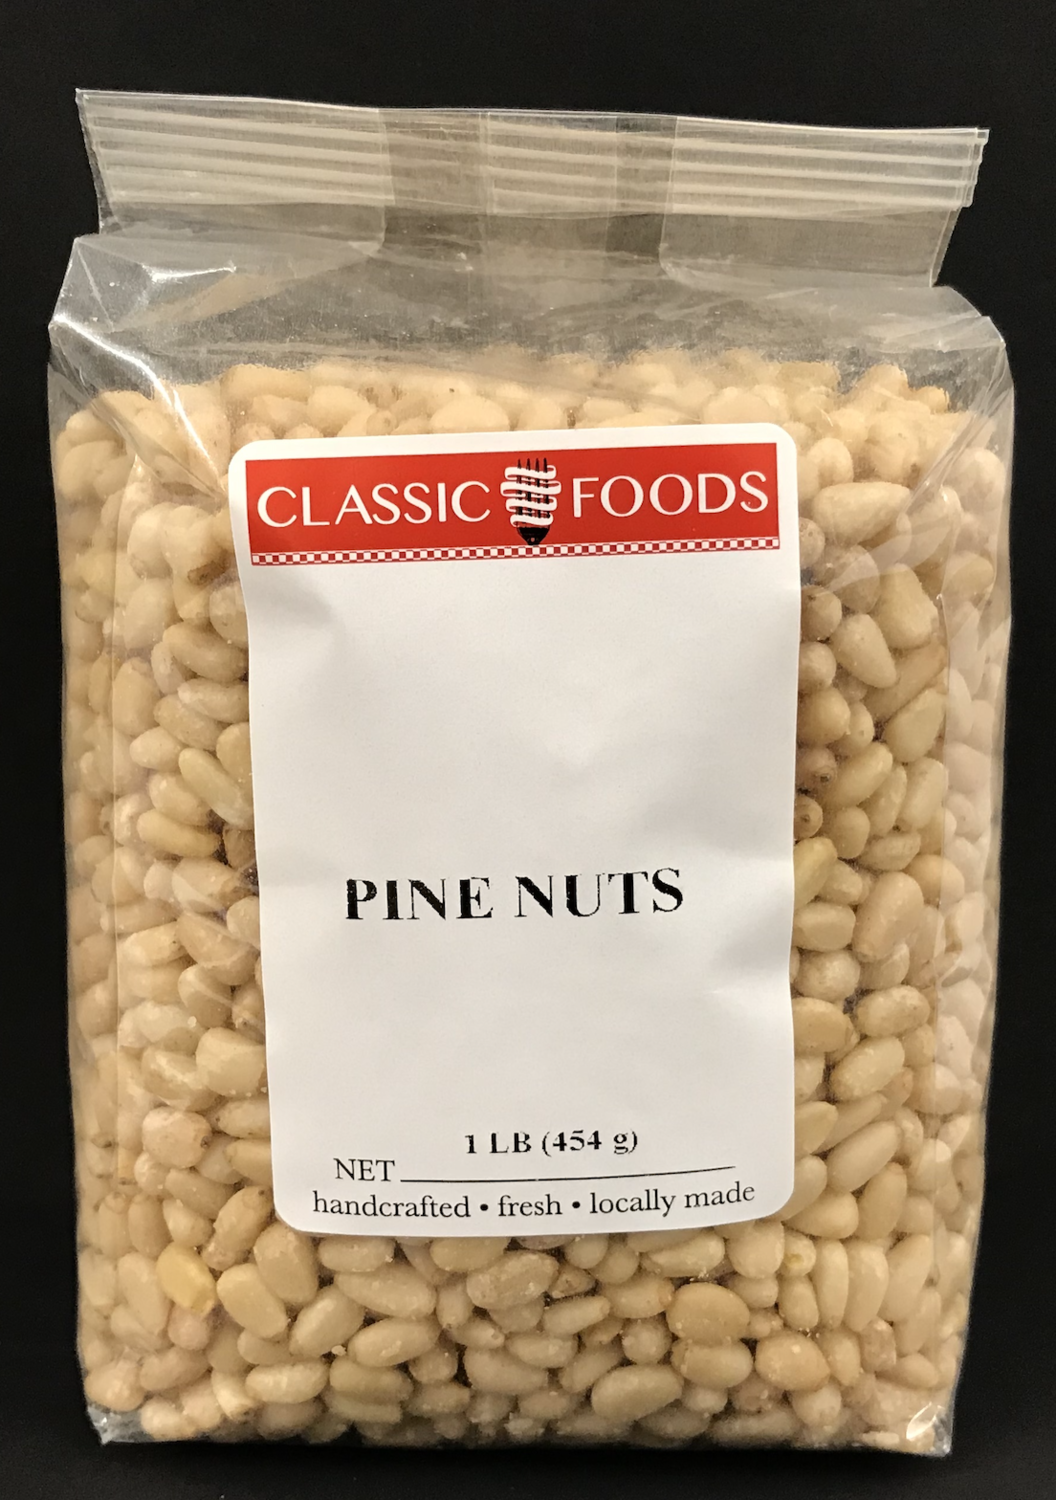 PINE NUTS 1 LB